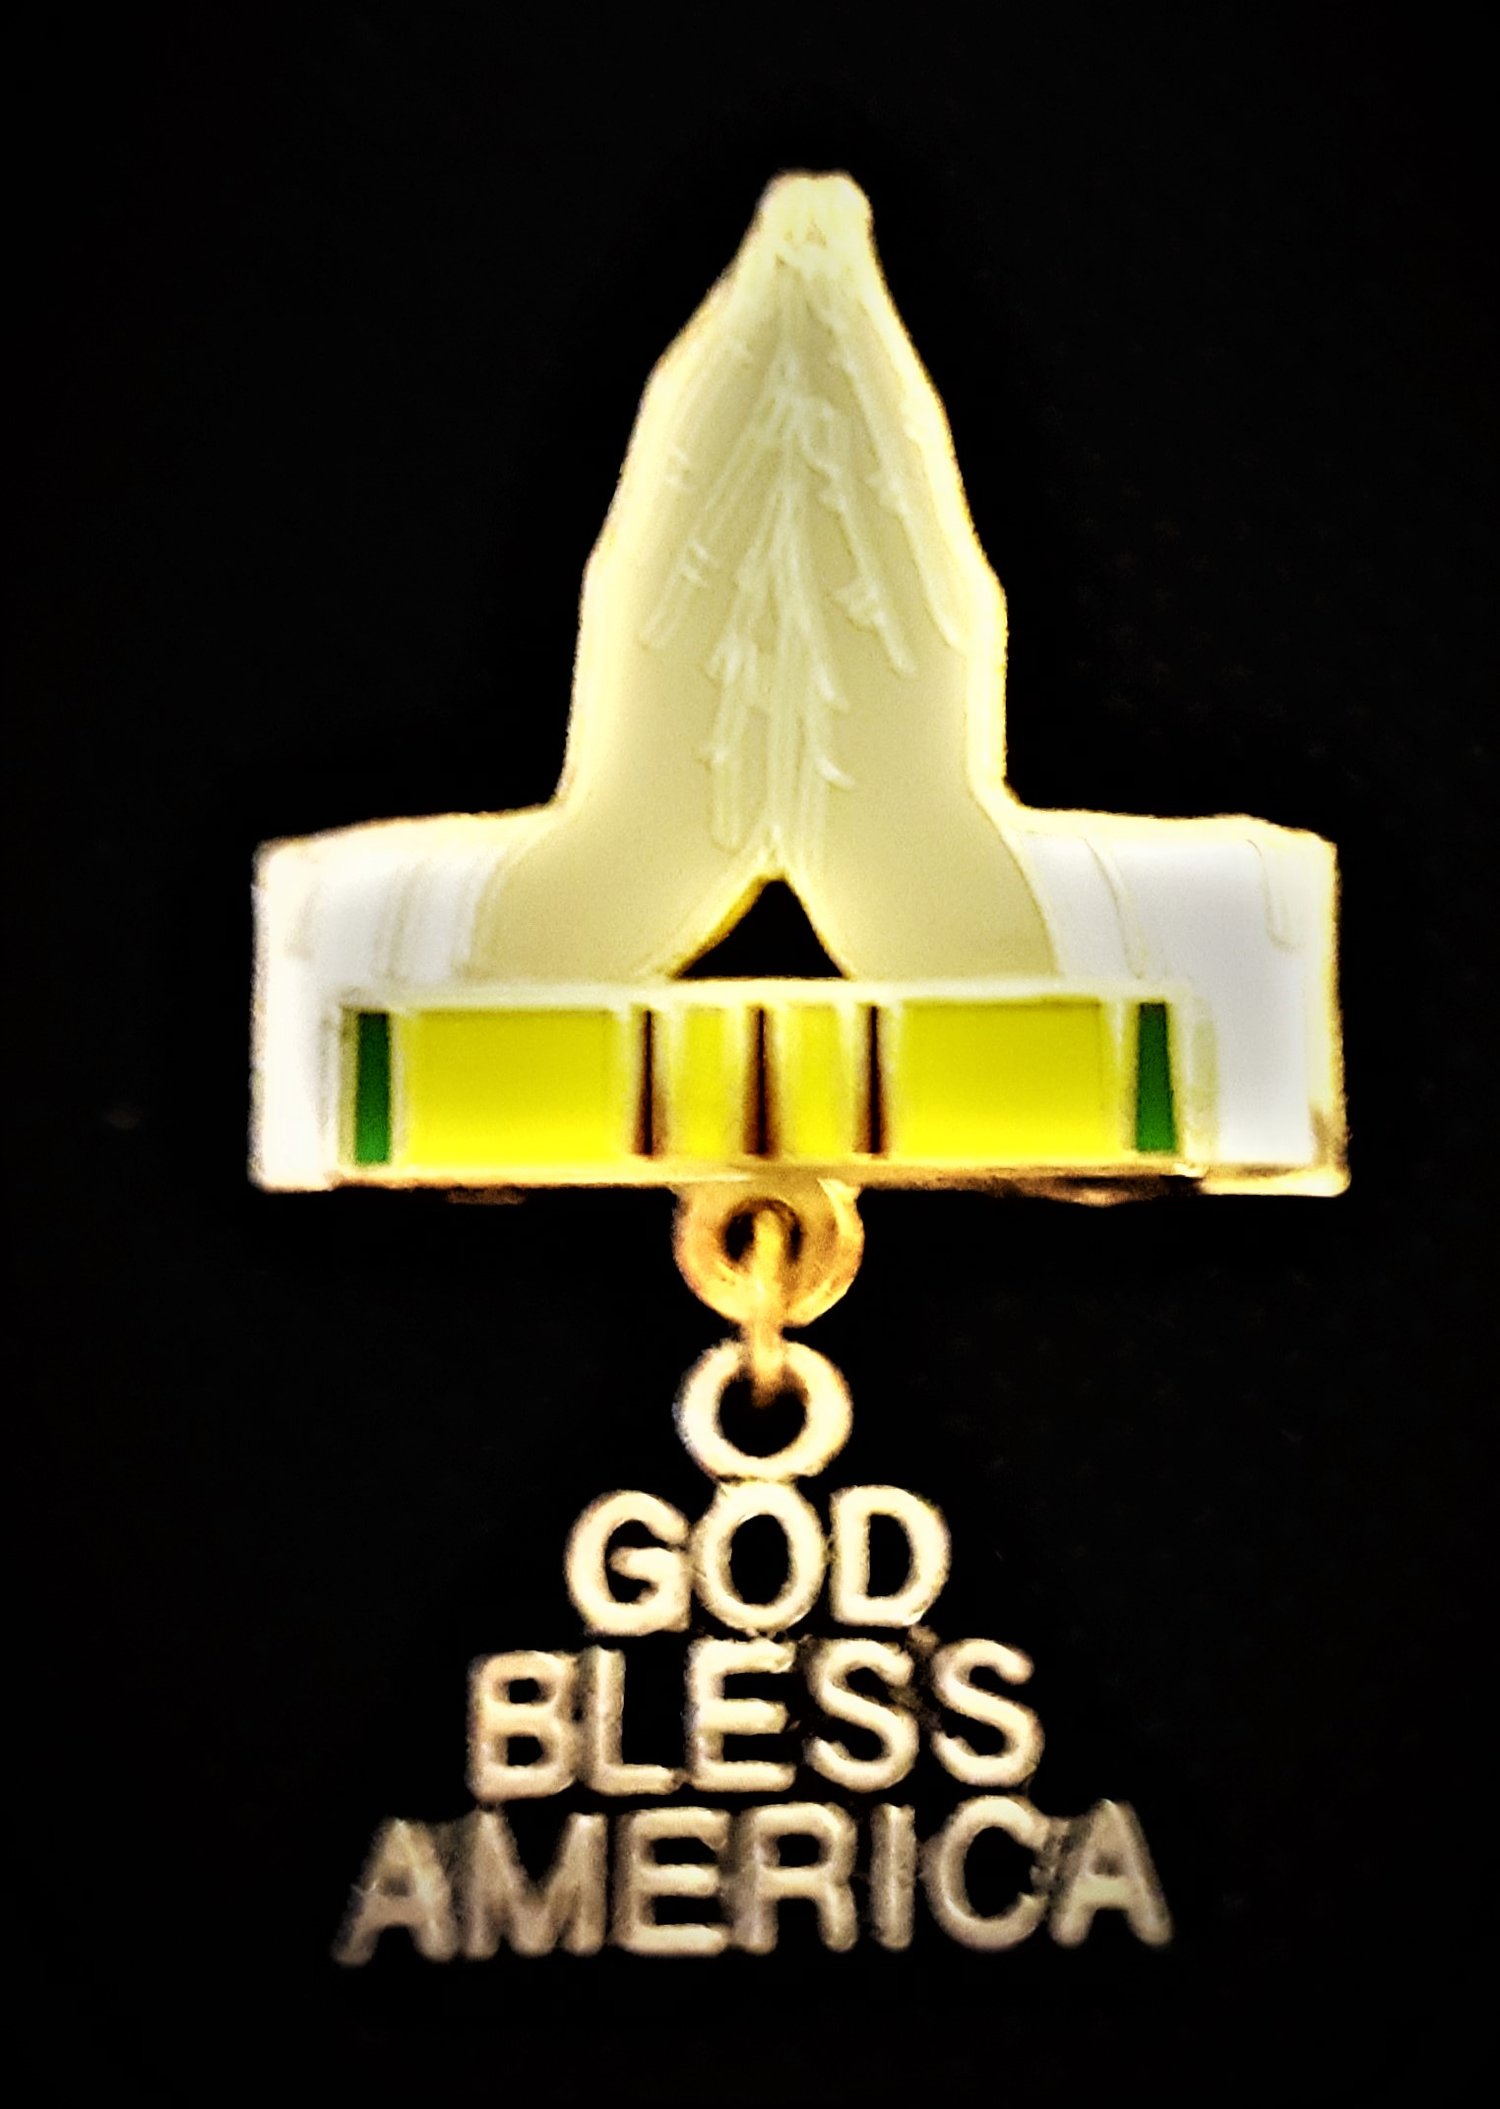 Image of Vietnam Veteran Praying Hands God Bless America pin